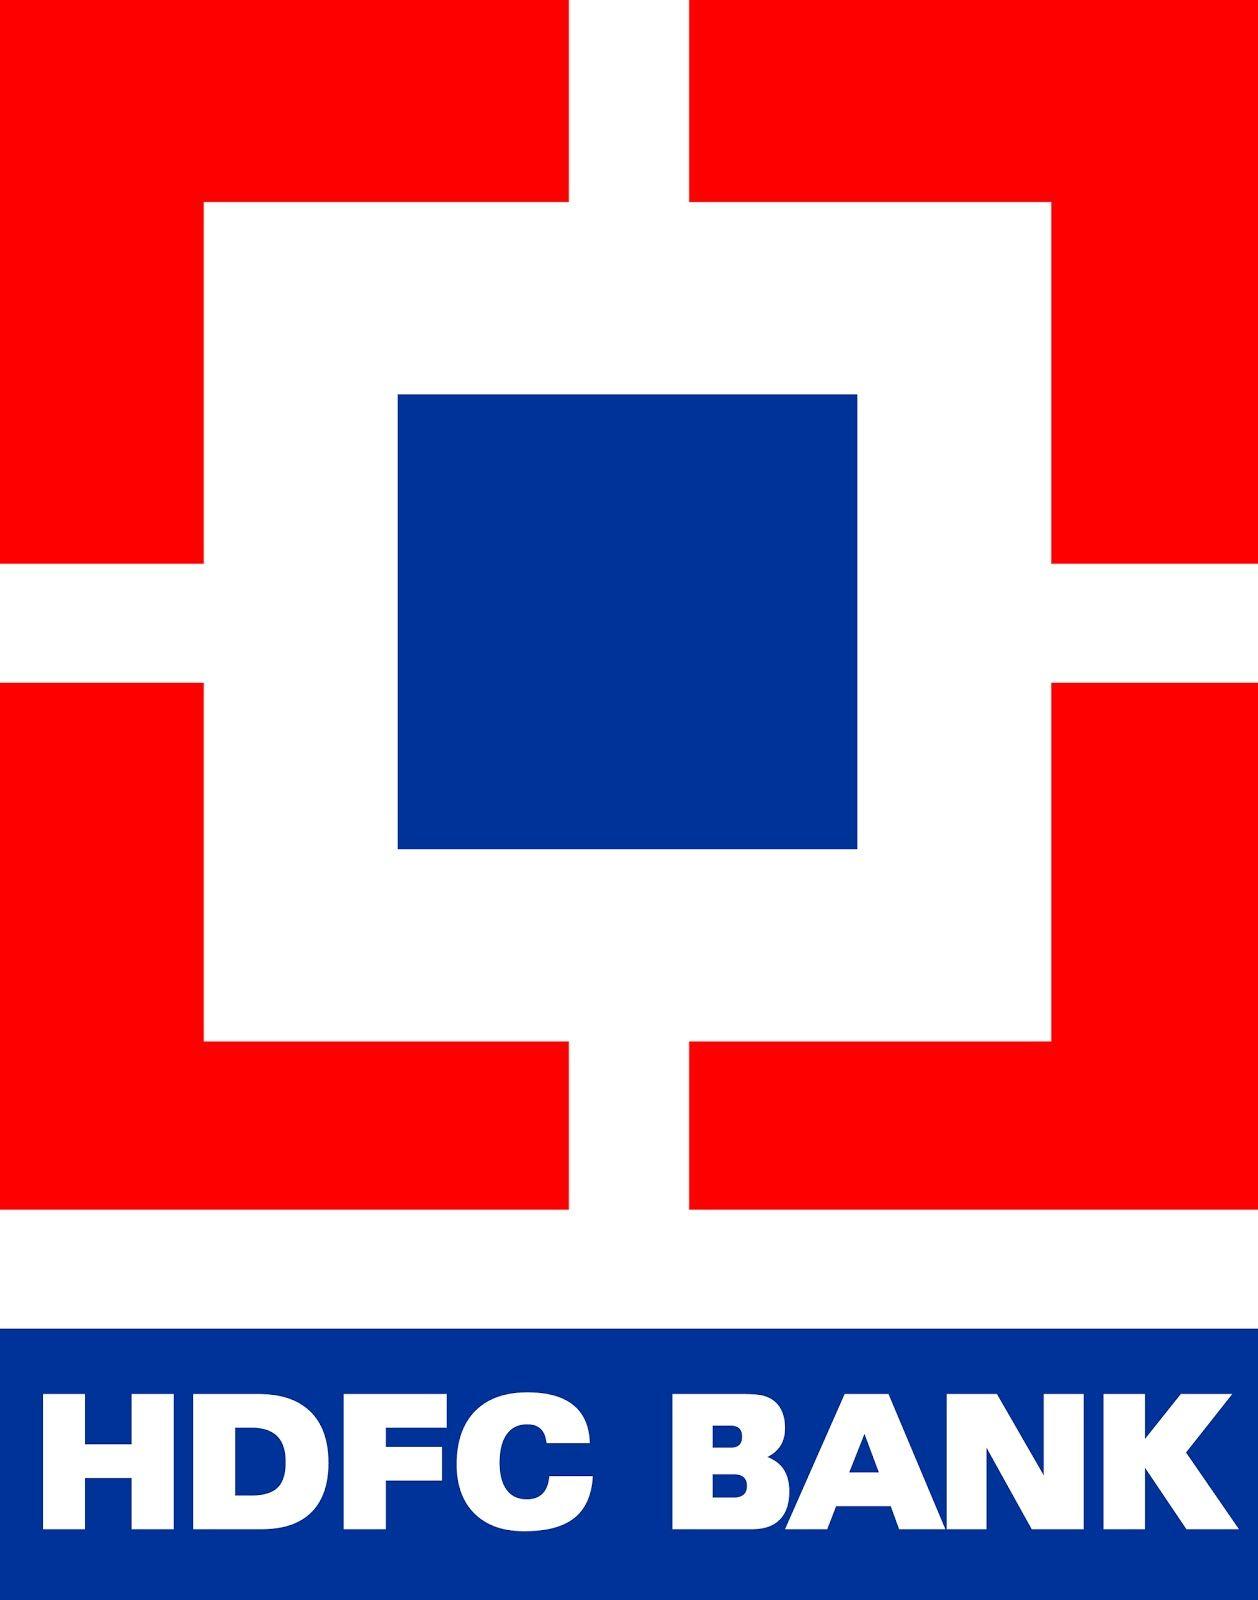 HDFC Bank Logo - HDFC Bank Logo and Tagline -